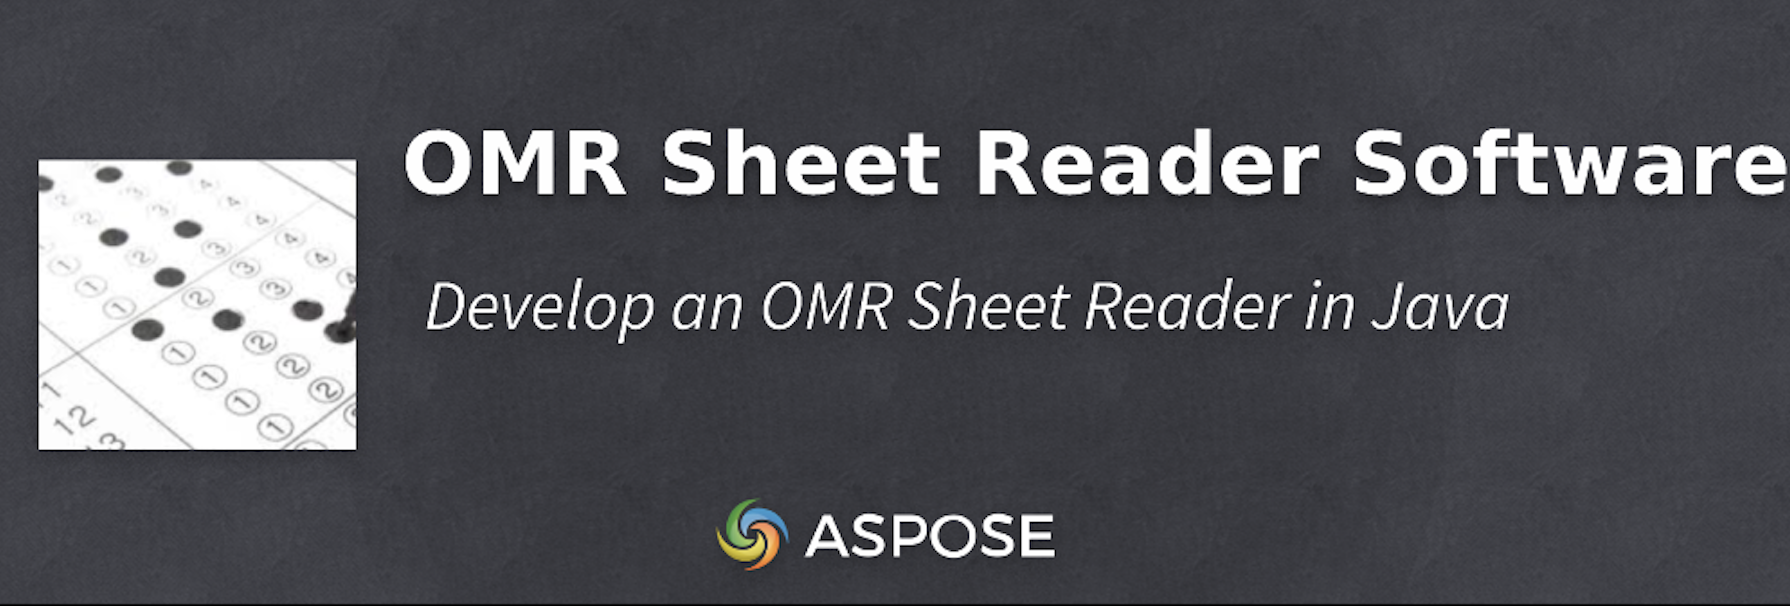 OMR Sheet Reader in Java - OMR Sheet PNG